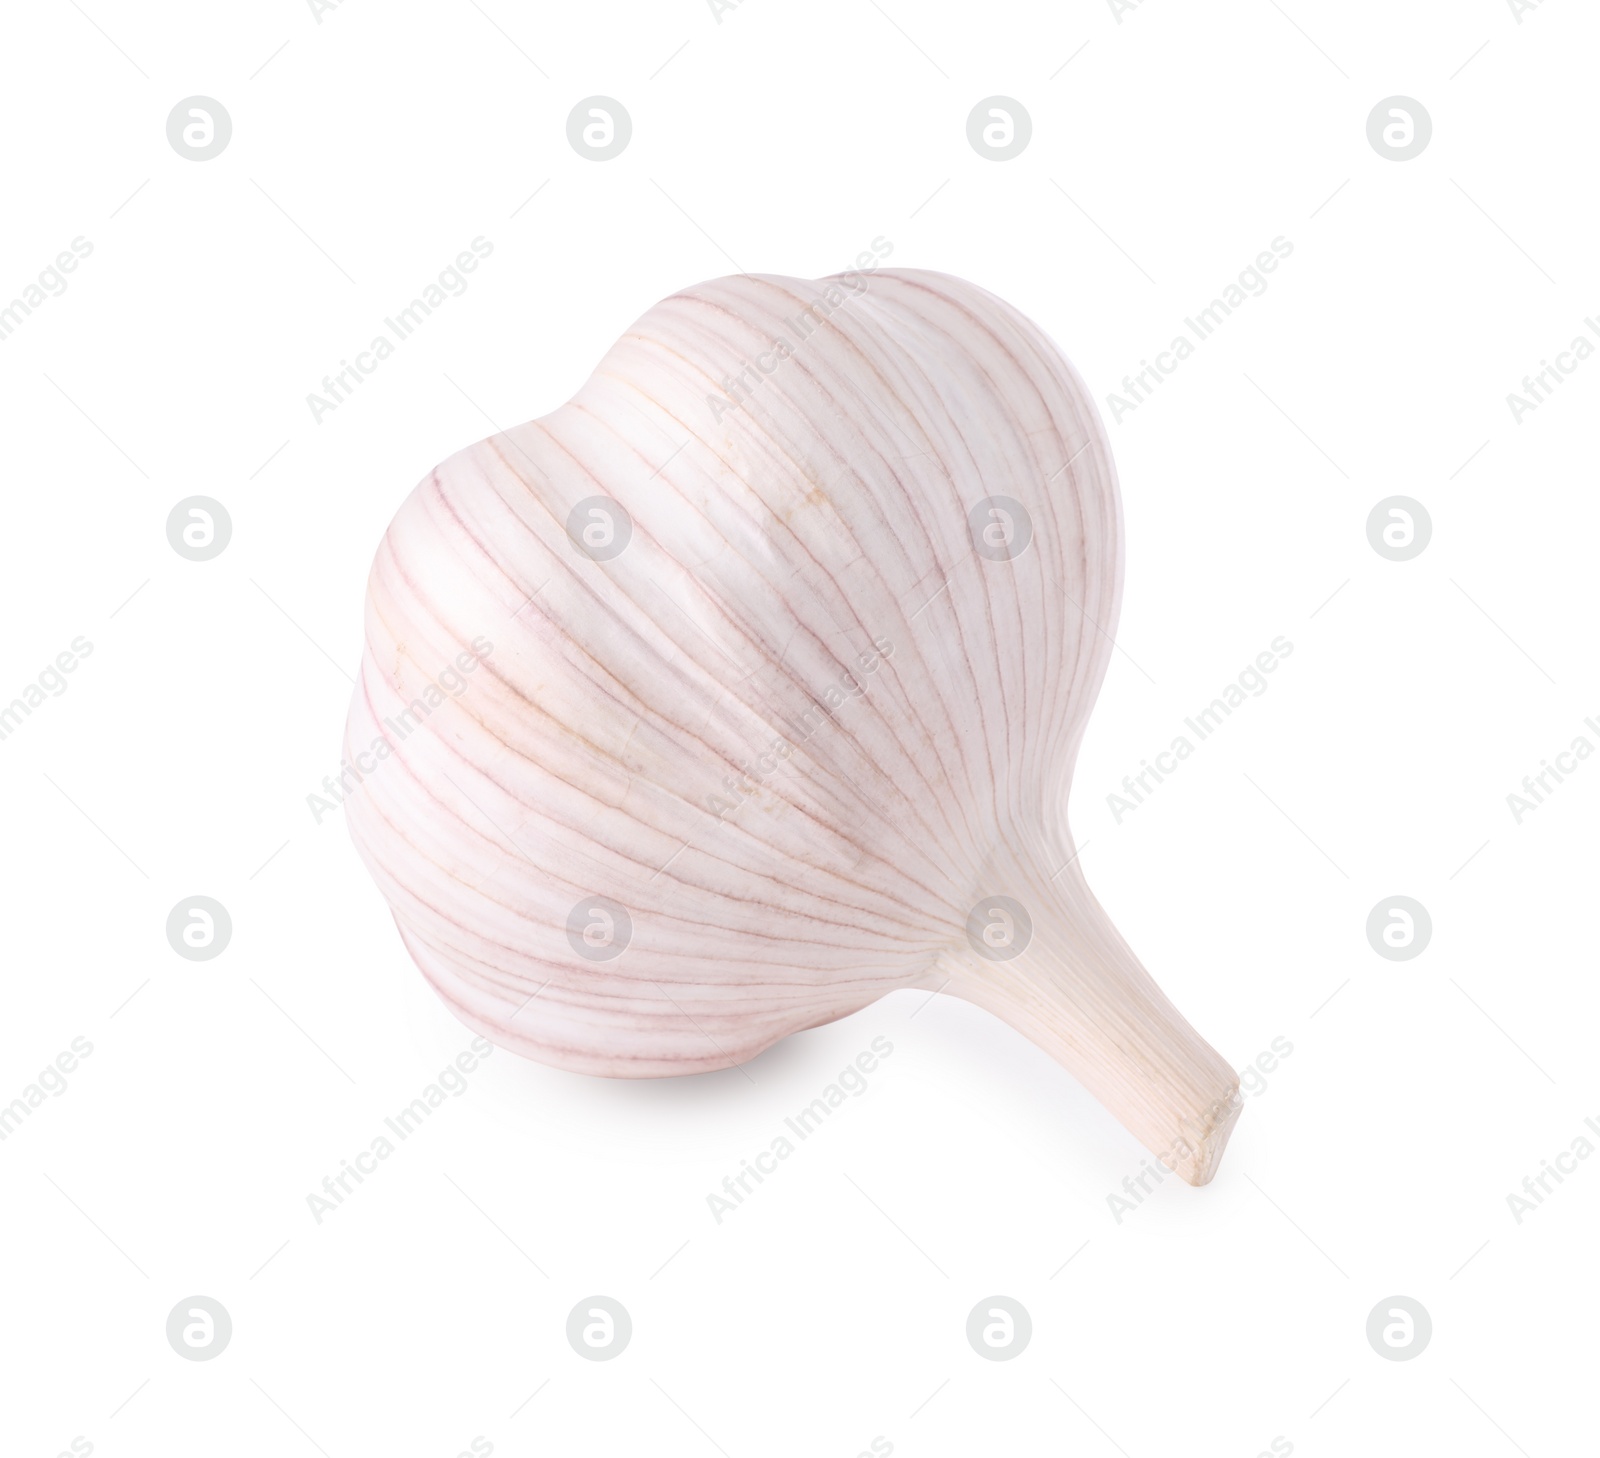 Photo of Head of fresh garlic isolated on white